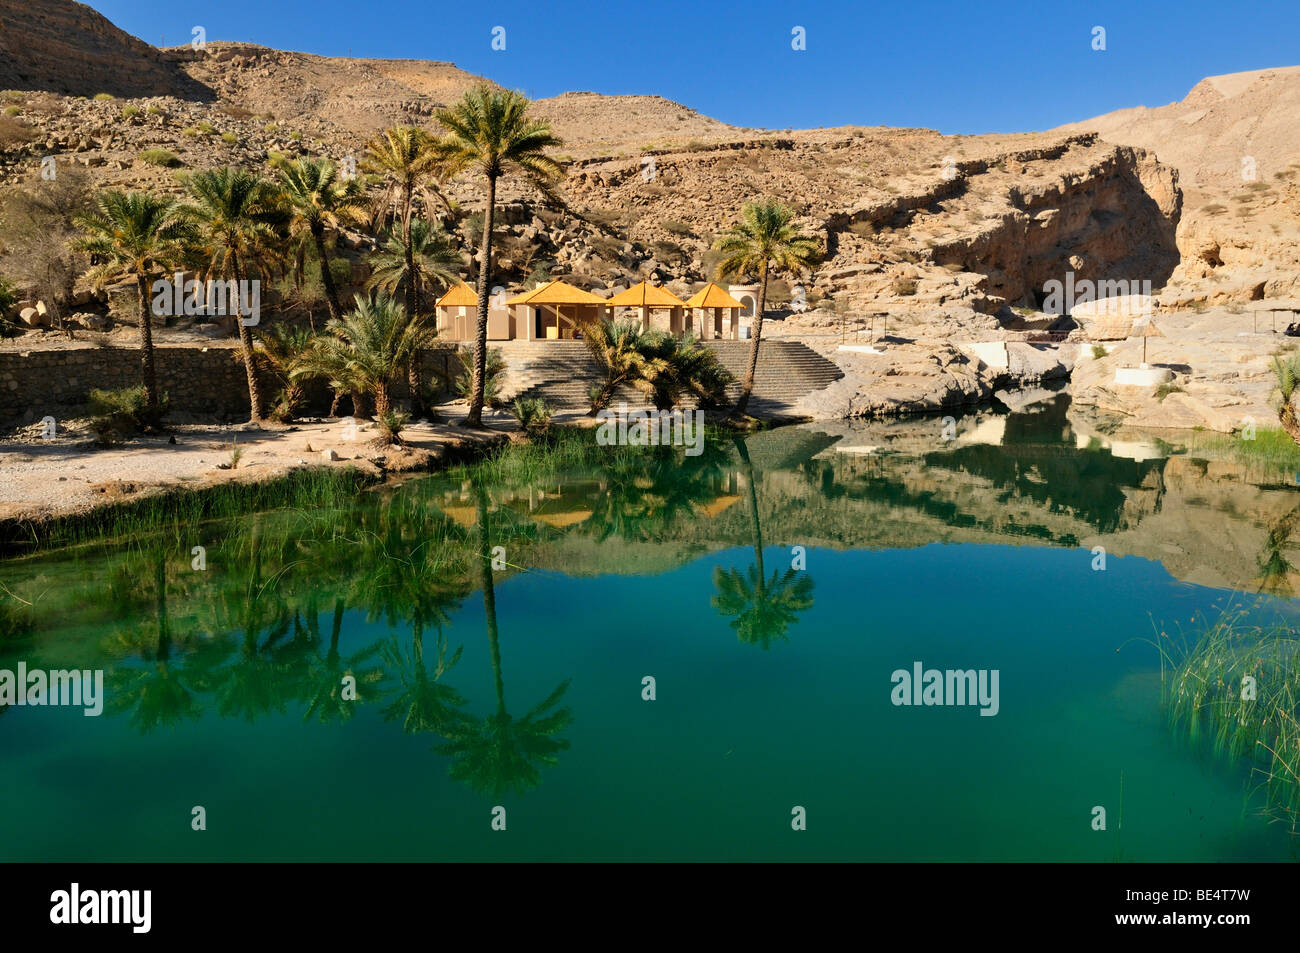 Water pool in a rocky canyon, Wadi Bani Khalid, Sharqiya Region, Sultanate of Oman, Arabia, Middle East Stock Photo